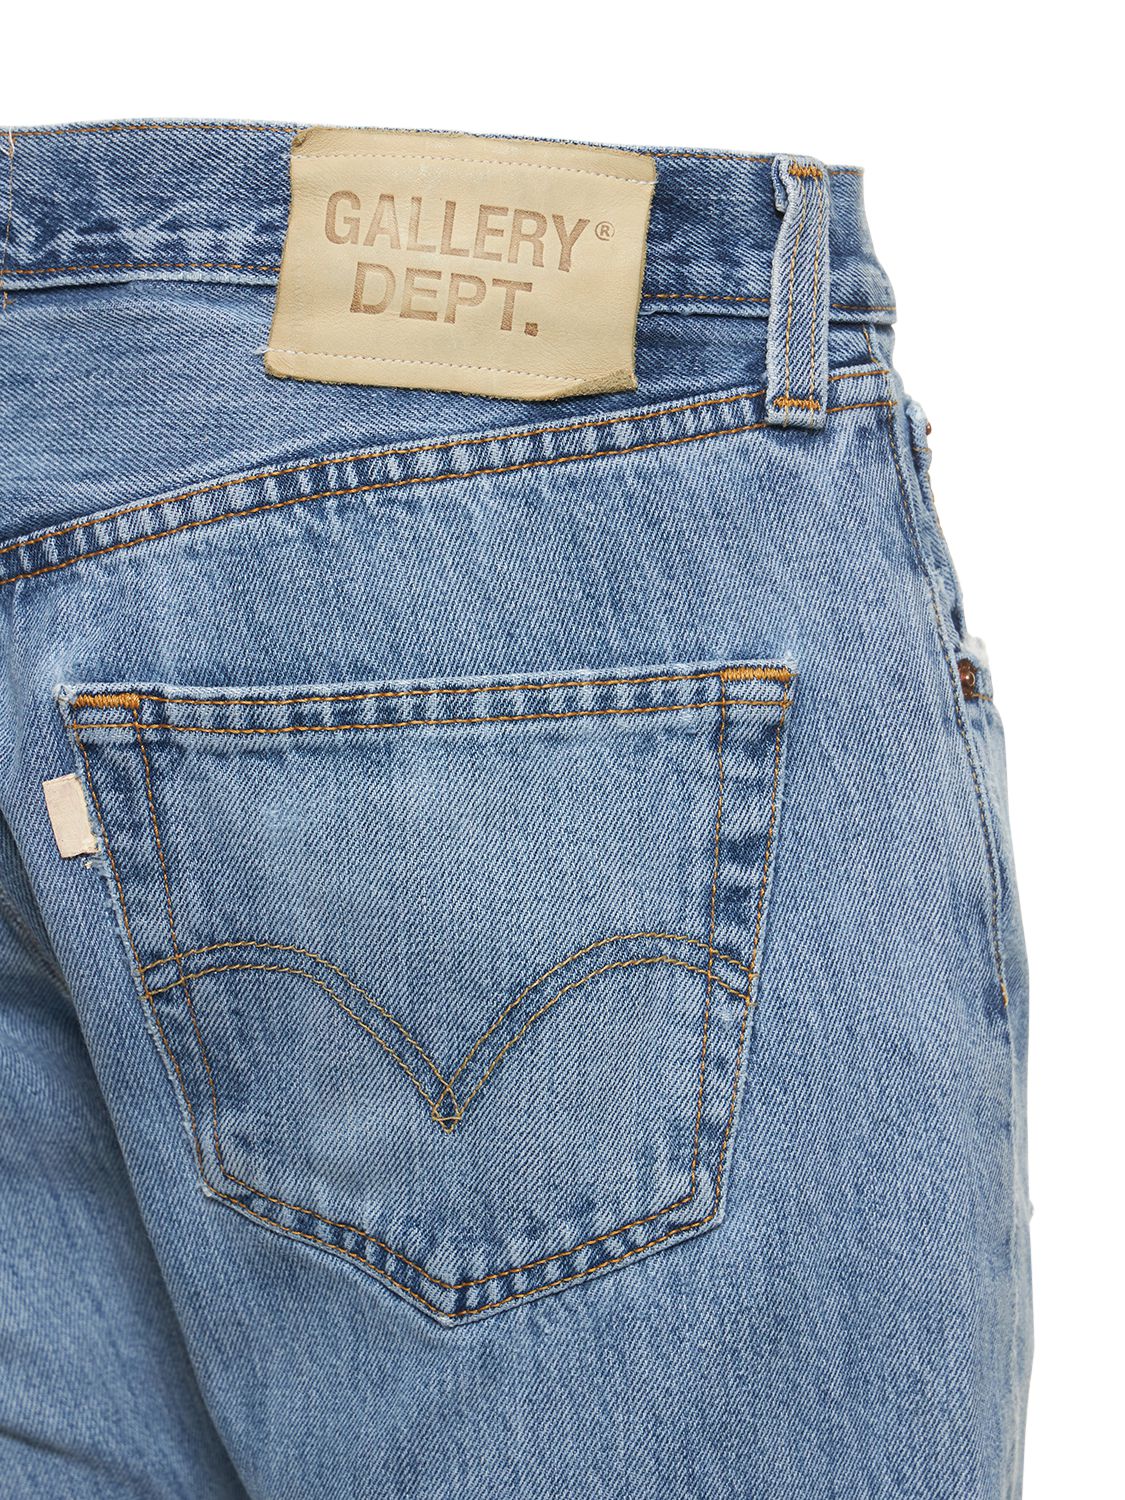 Gallery Dept. Ranger 5001 Vintage Denim Jeans In Blue | ModeSens